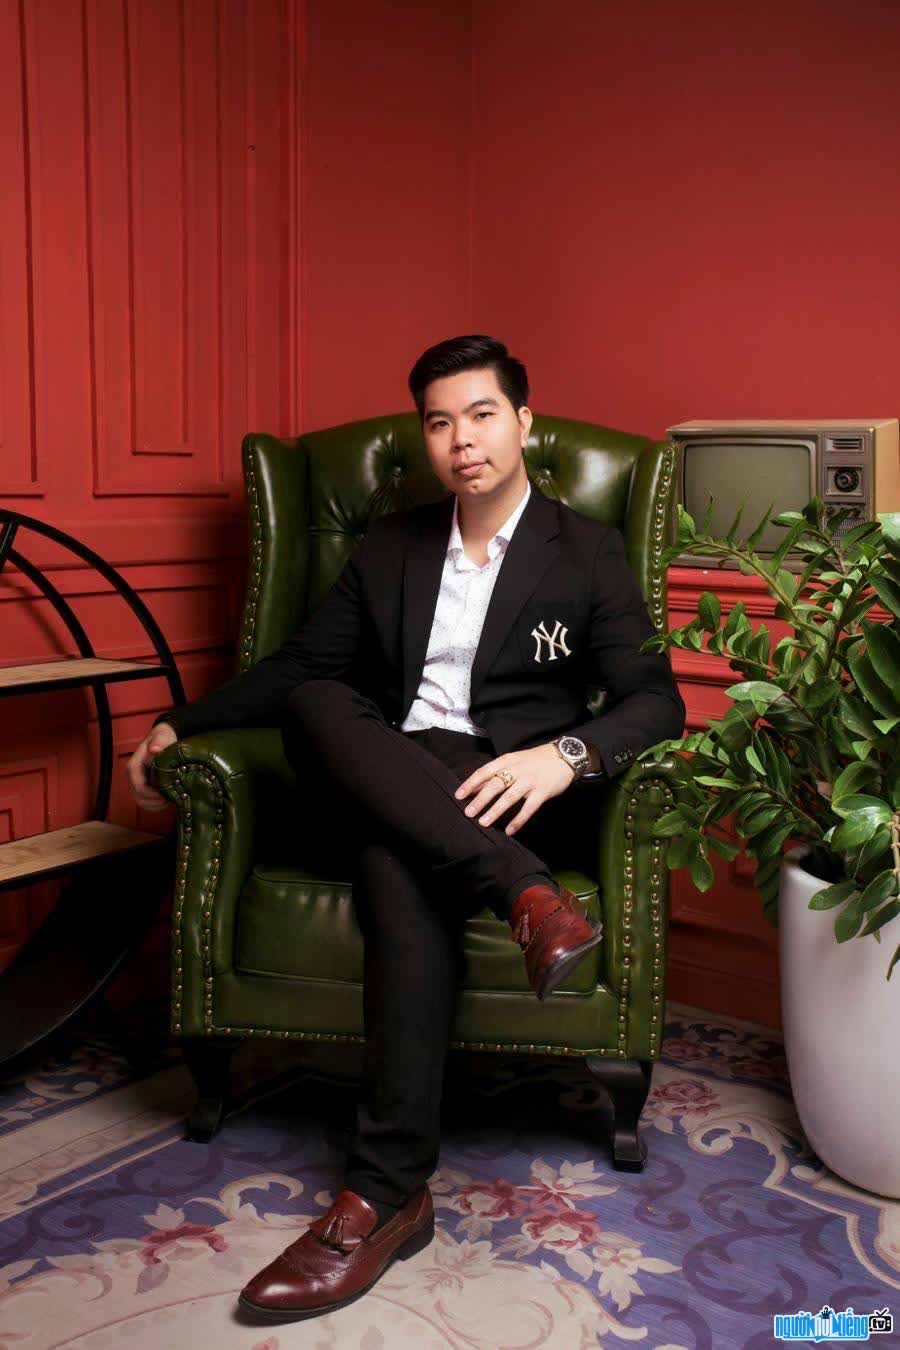 Tiktoker Cuong Ha is an entrepreneur in the field of online business